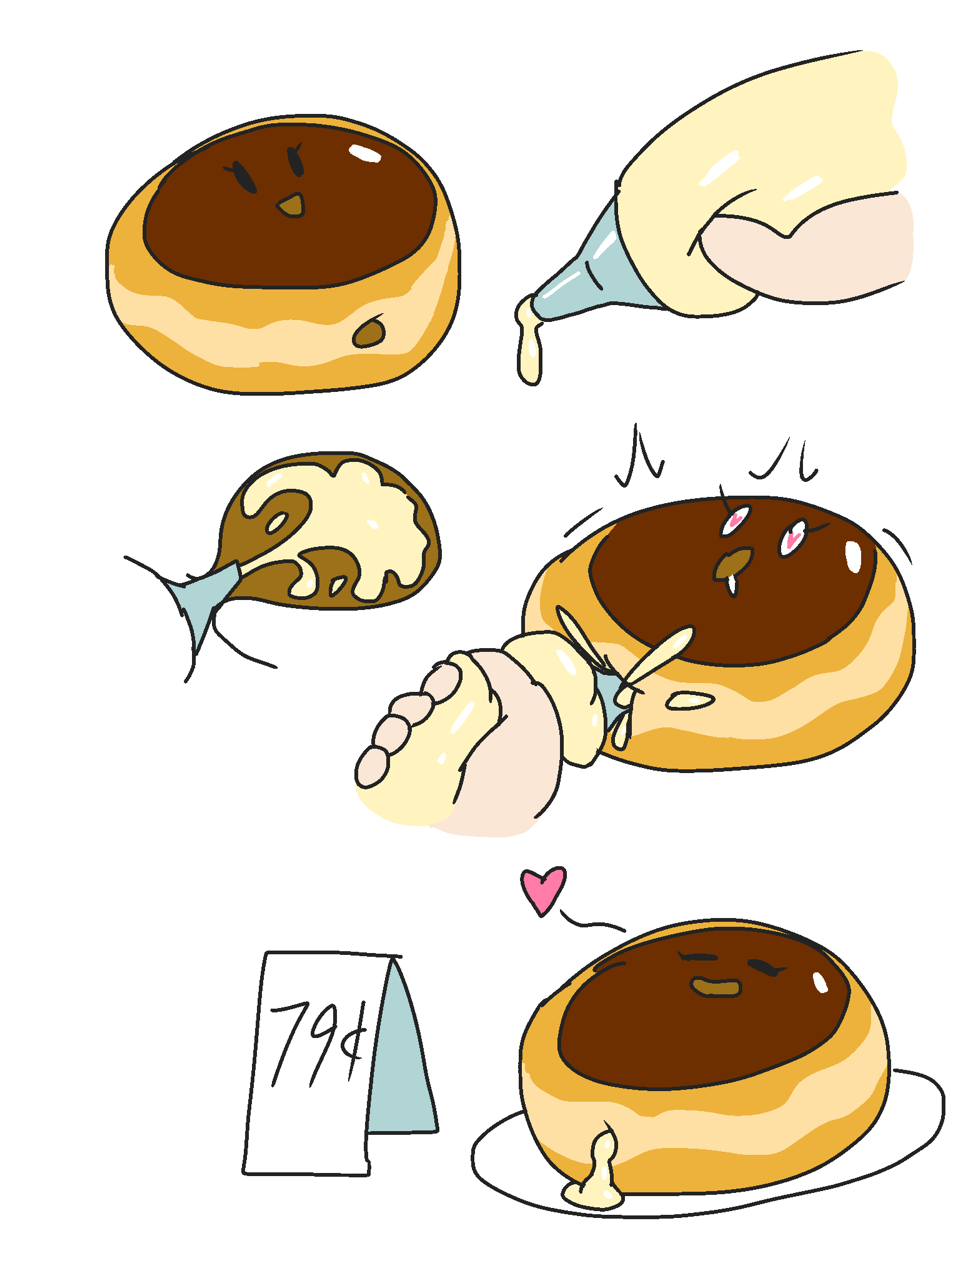 Post 2591830: Donut food inanimate JK-Kino